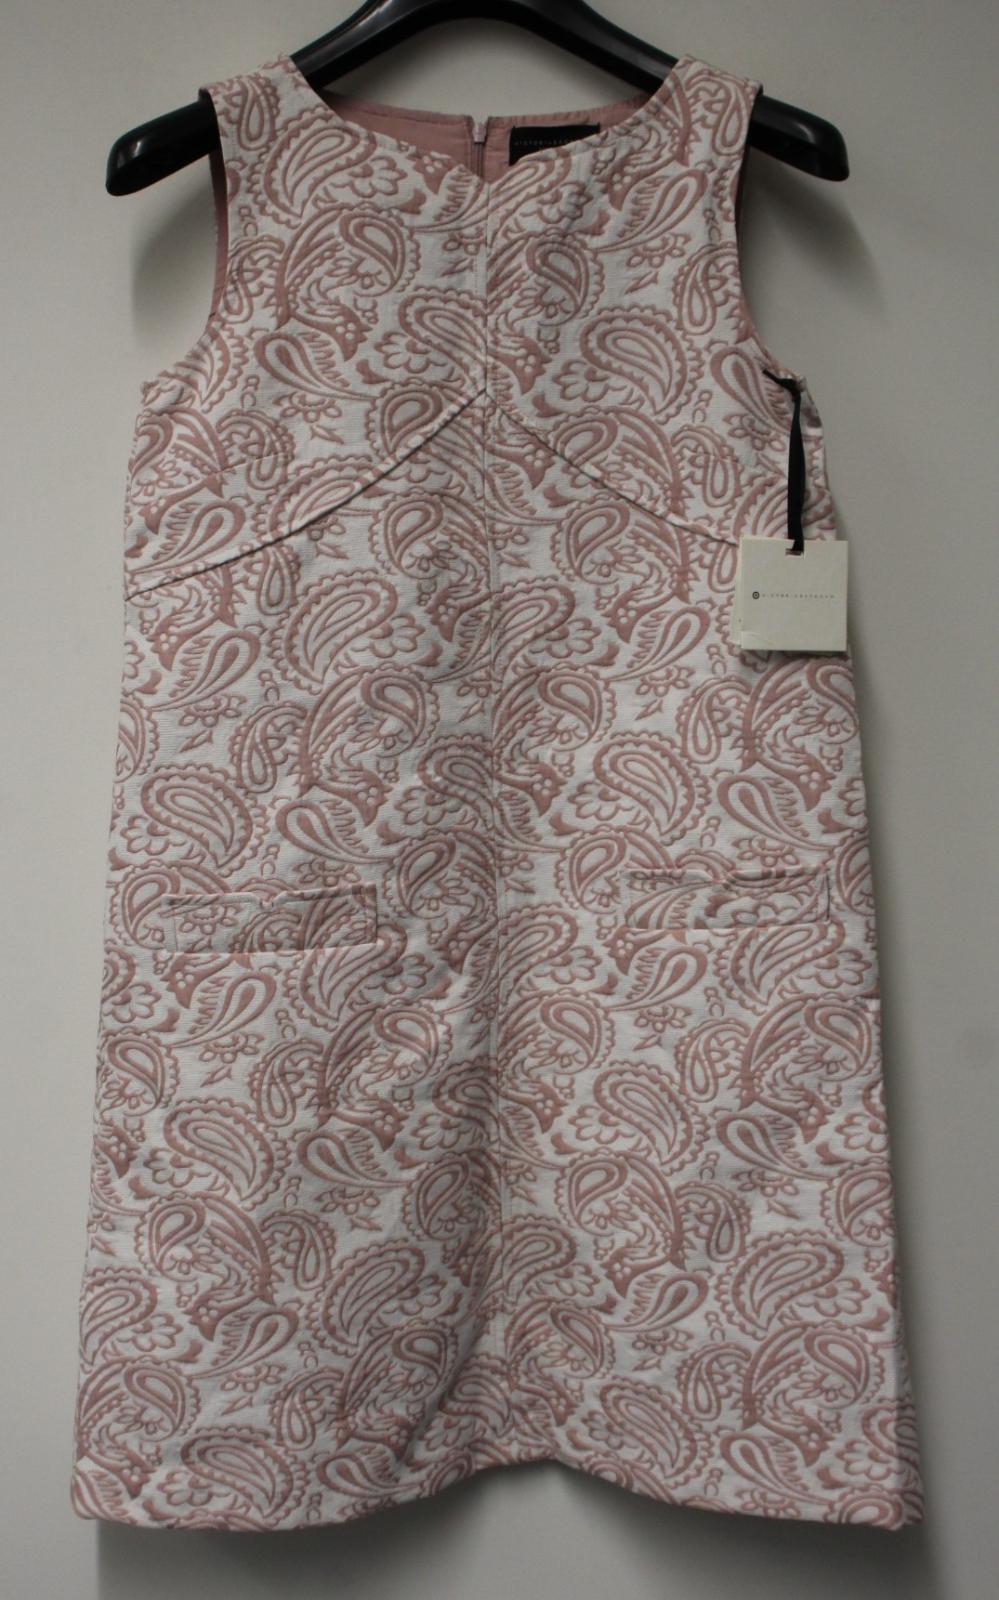 VICTORIA BECKHAM FOR TARGET Ladies Pink Cotton Blend Shift Dress XL NEW